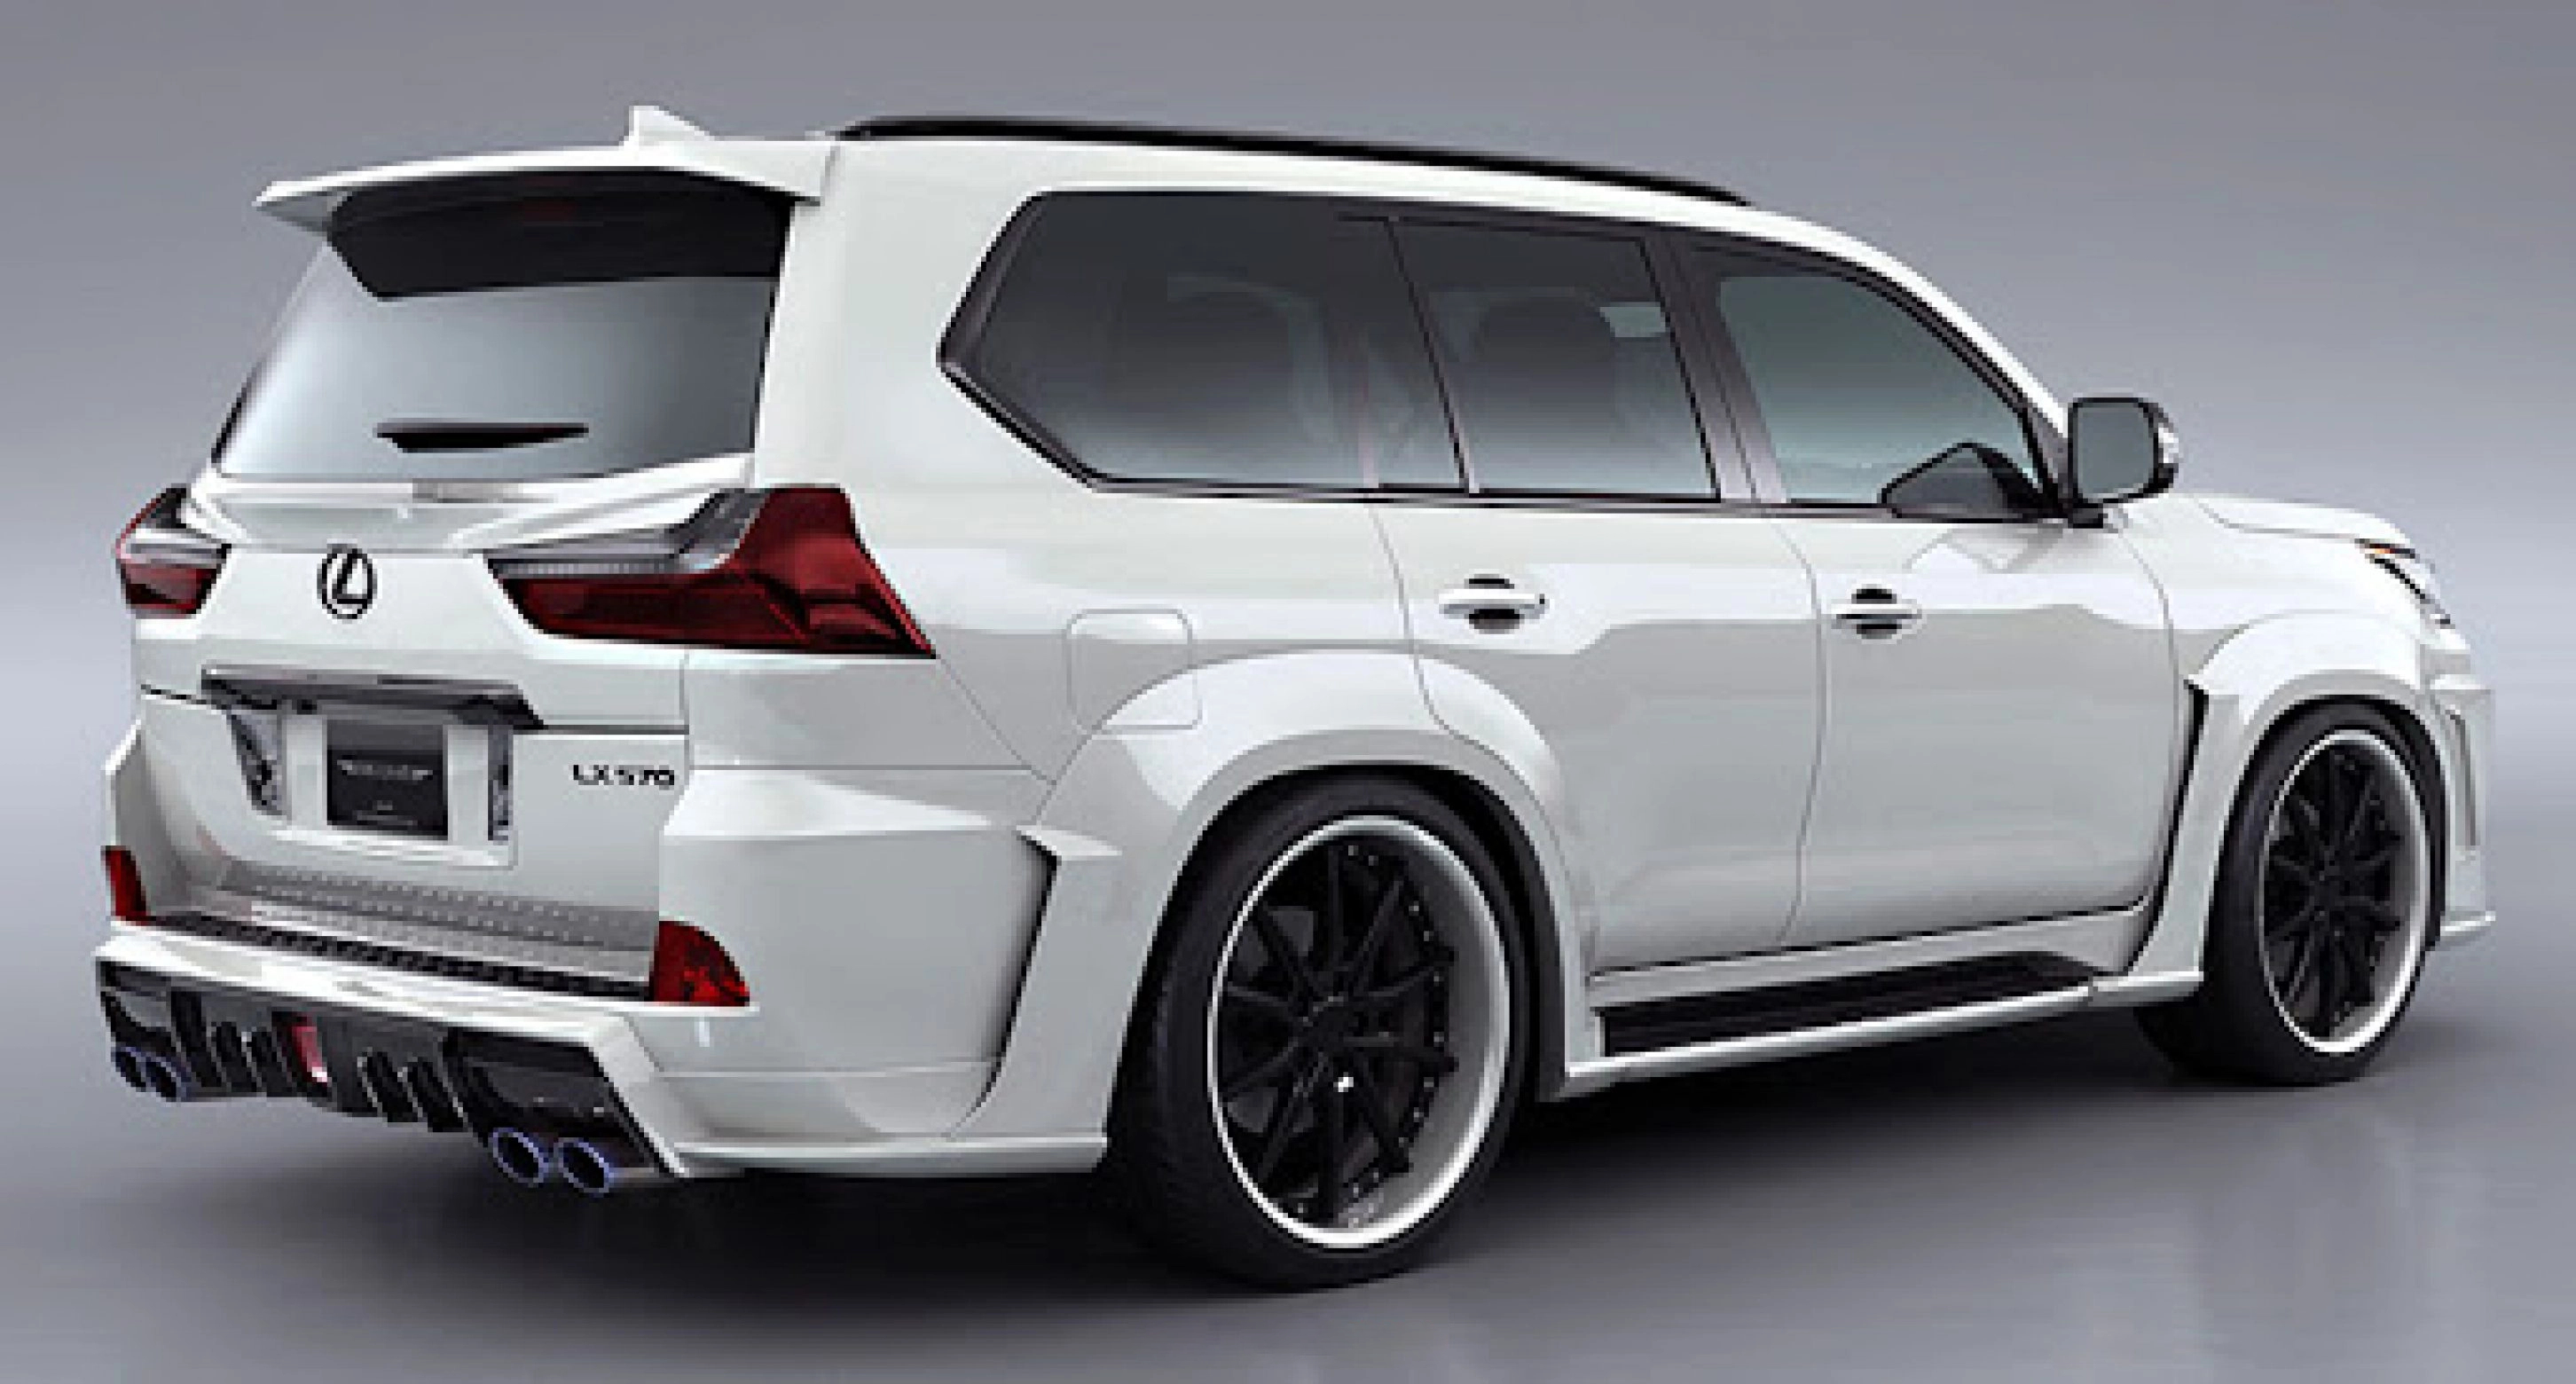 Widebody kit Carbon for Lexus LX570